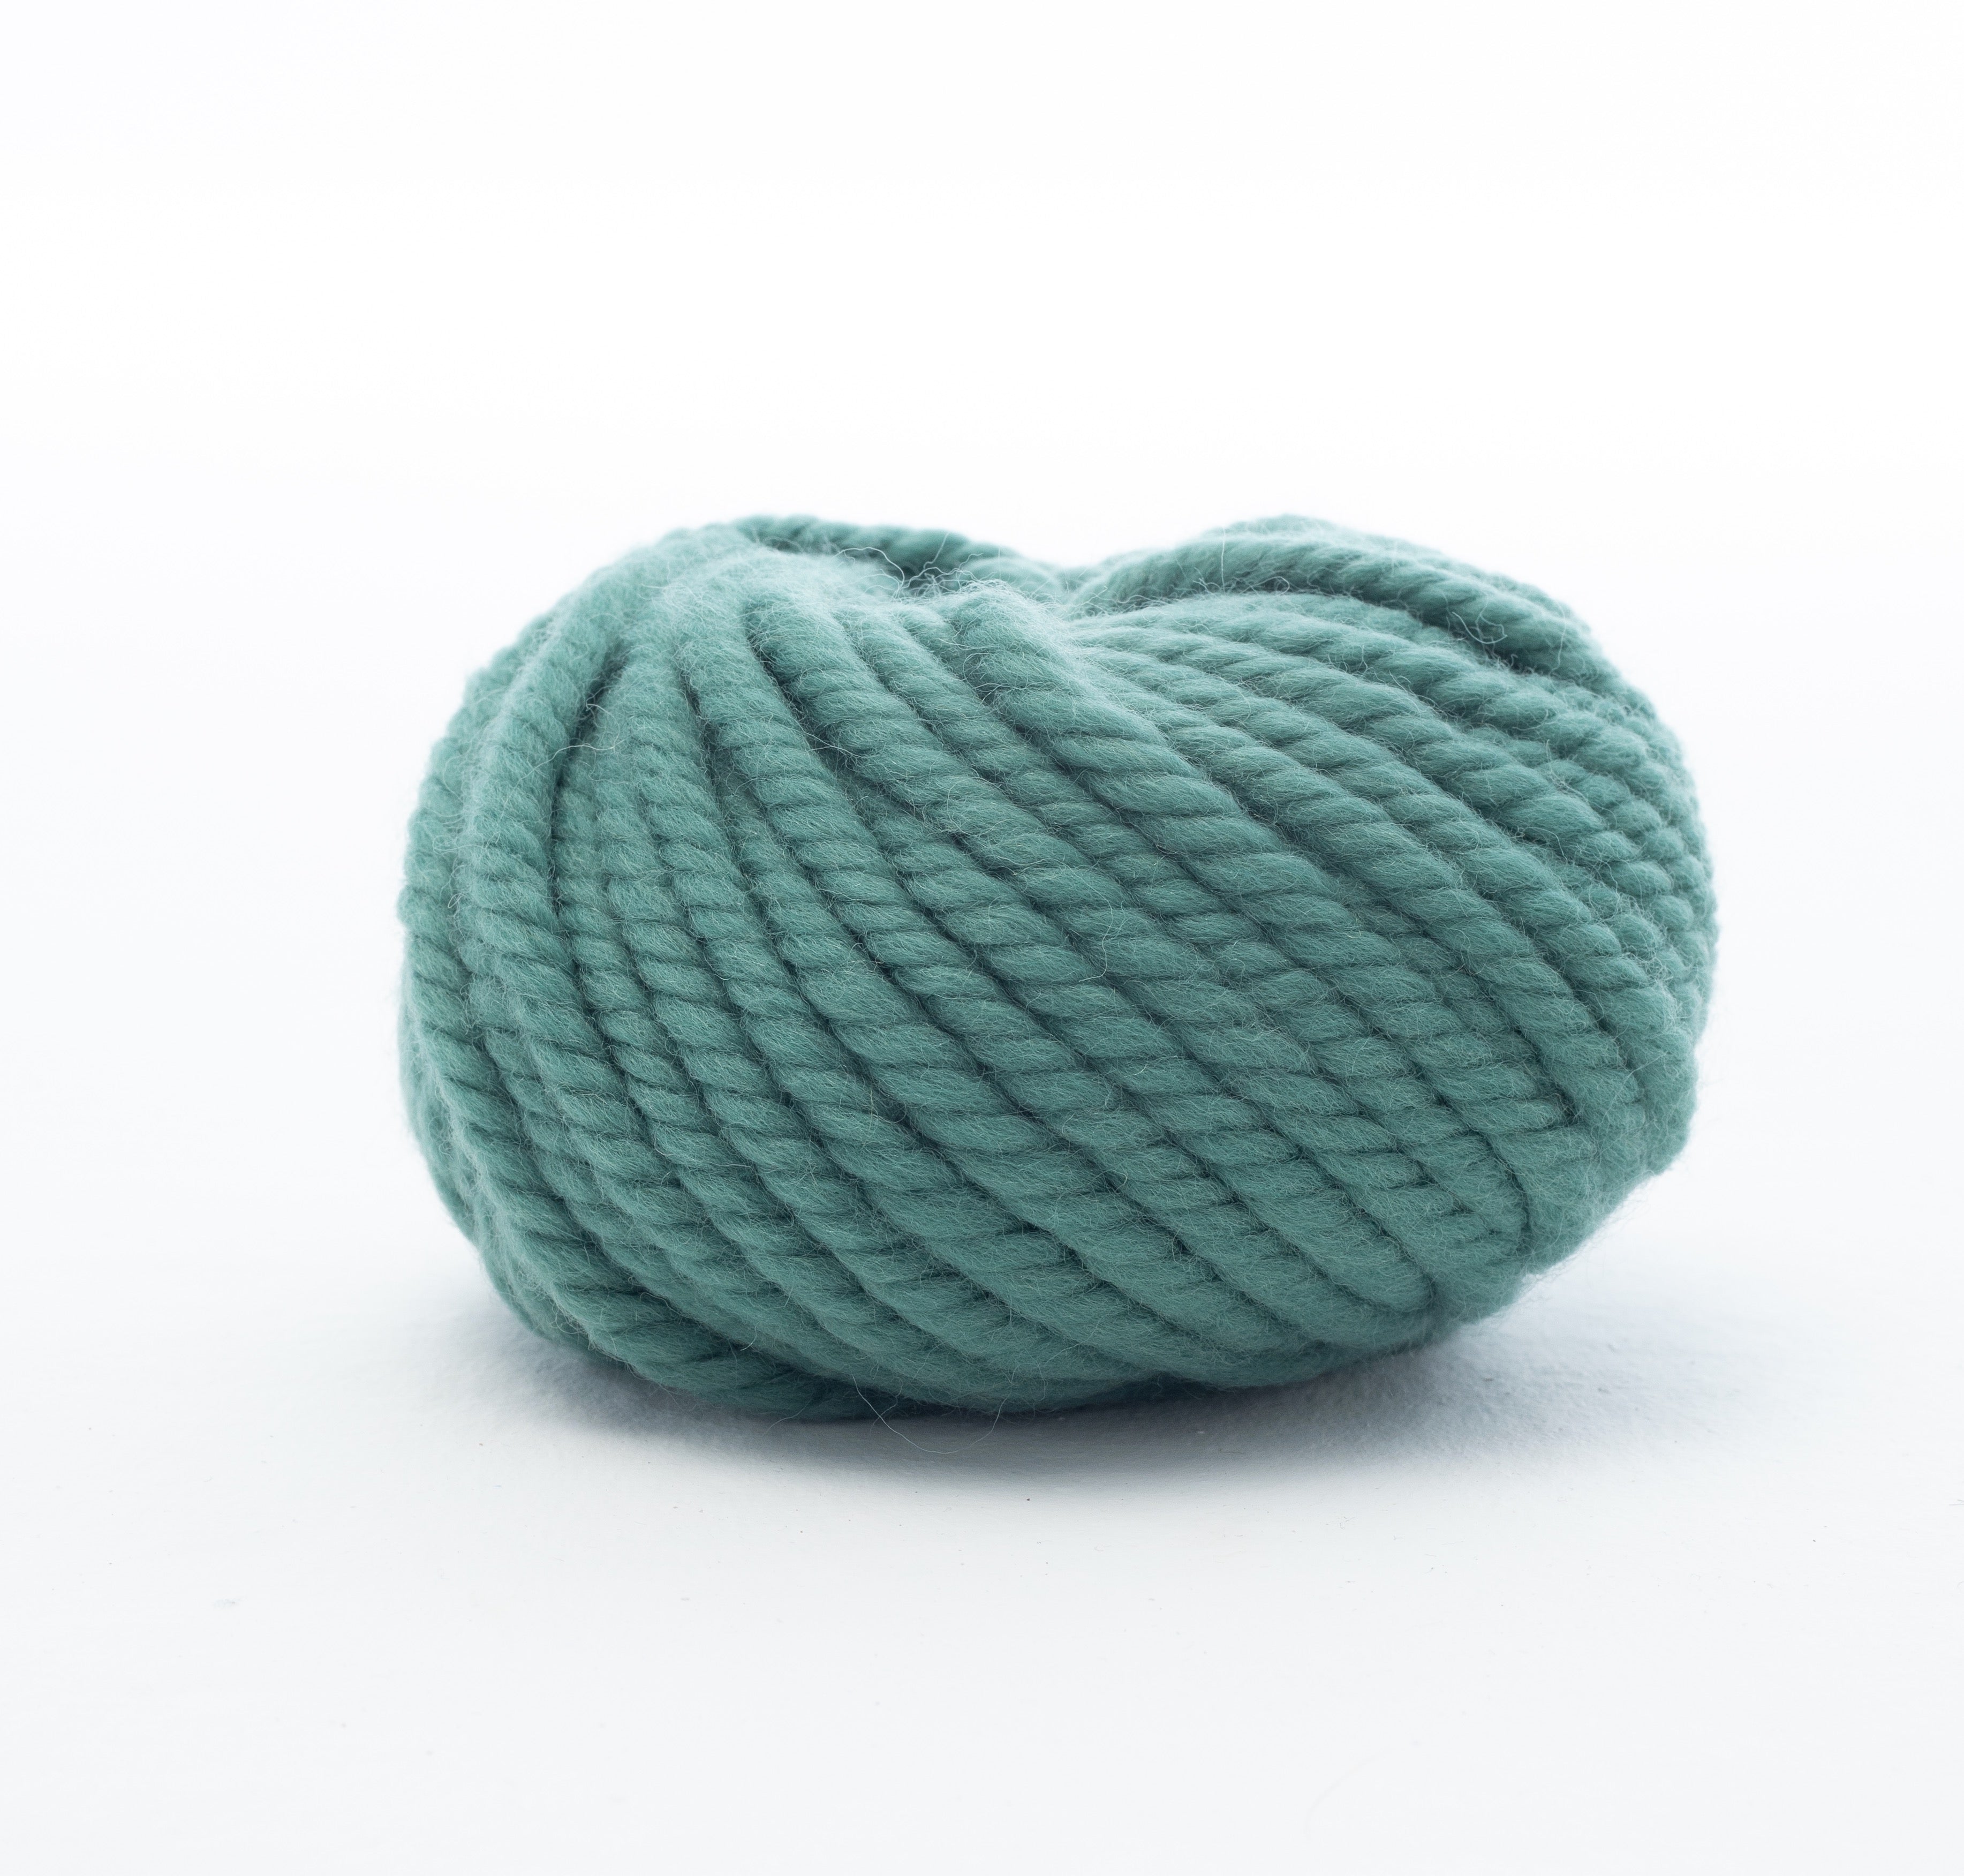 Teal Super Chunky Yarn. Cheeky Chunky Yarn by Wool Couture. 200g Skein  Chunky Yarn in Teal Green. Pure Merino Wool. 